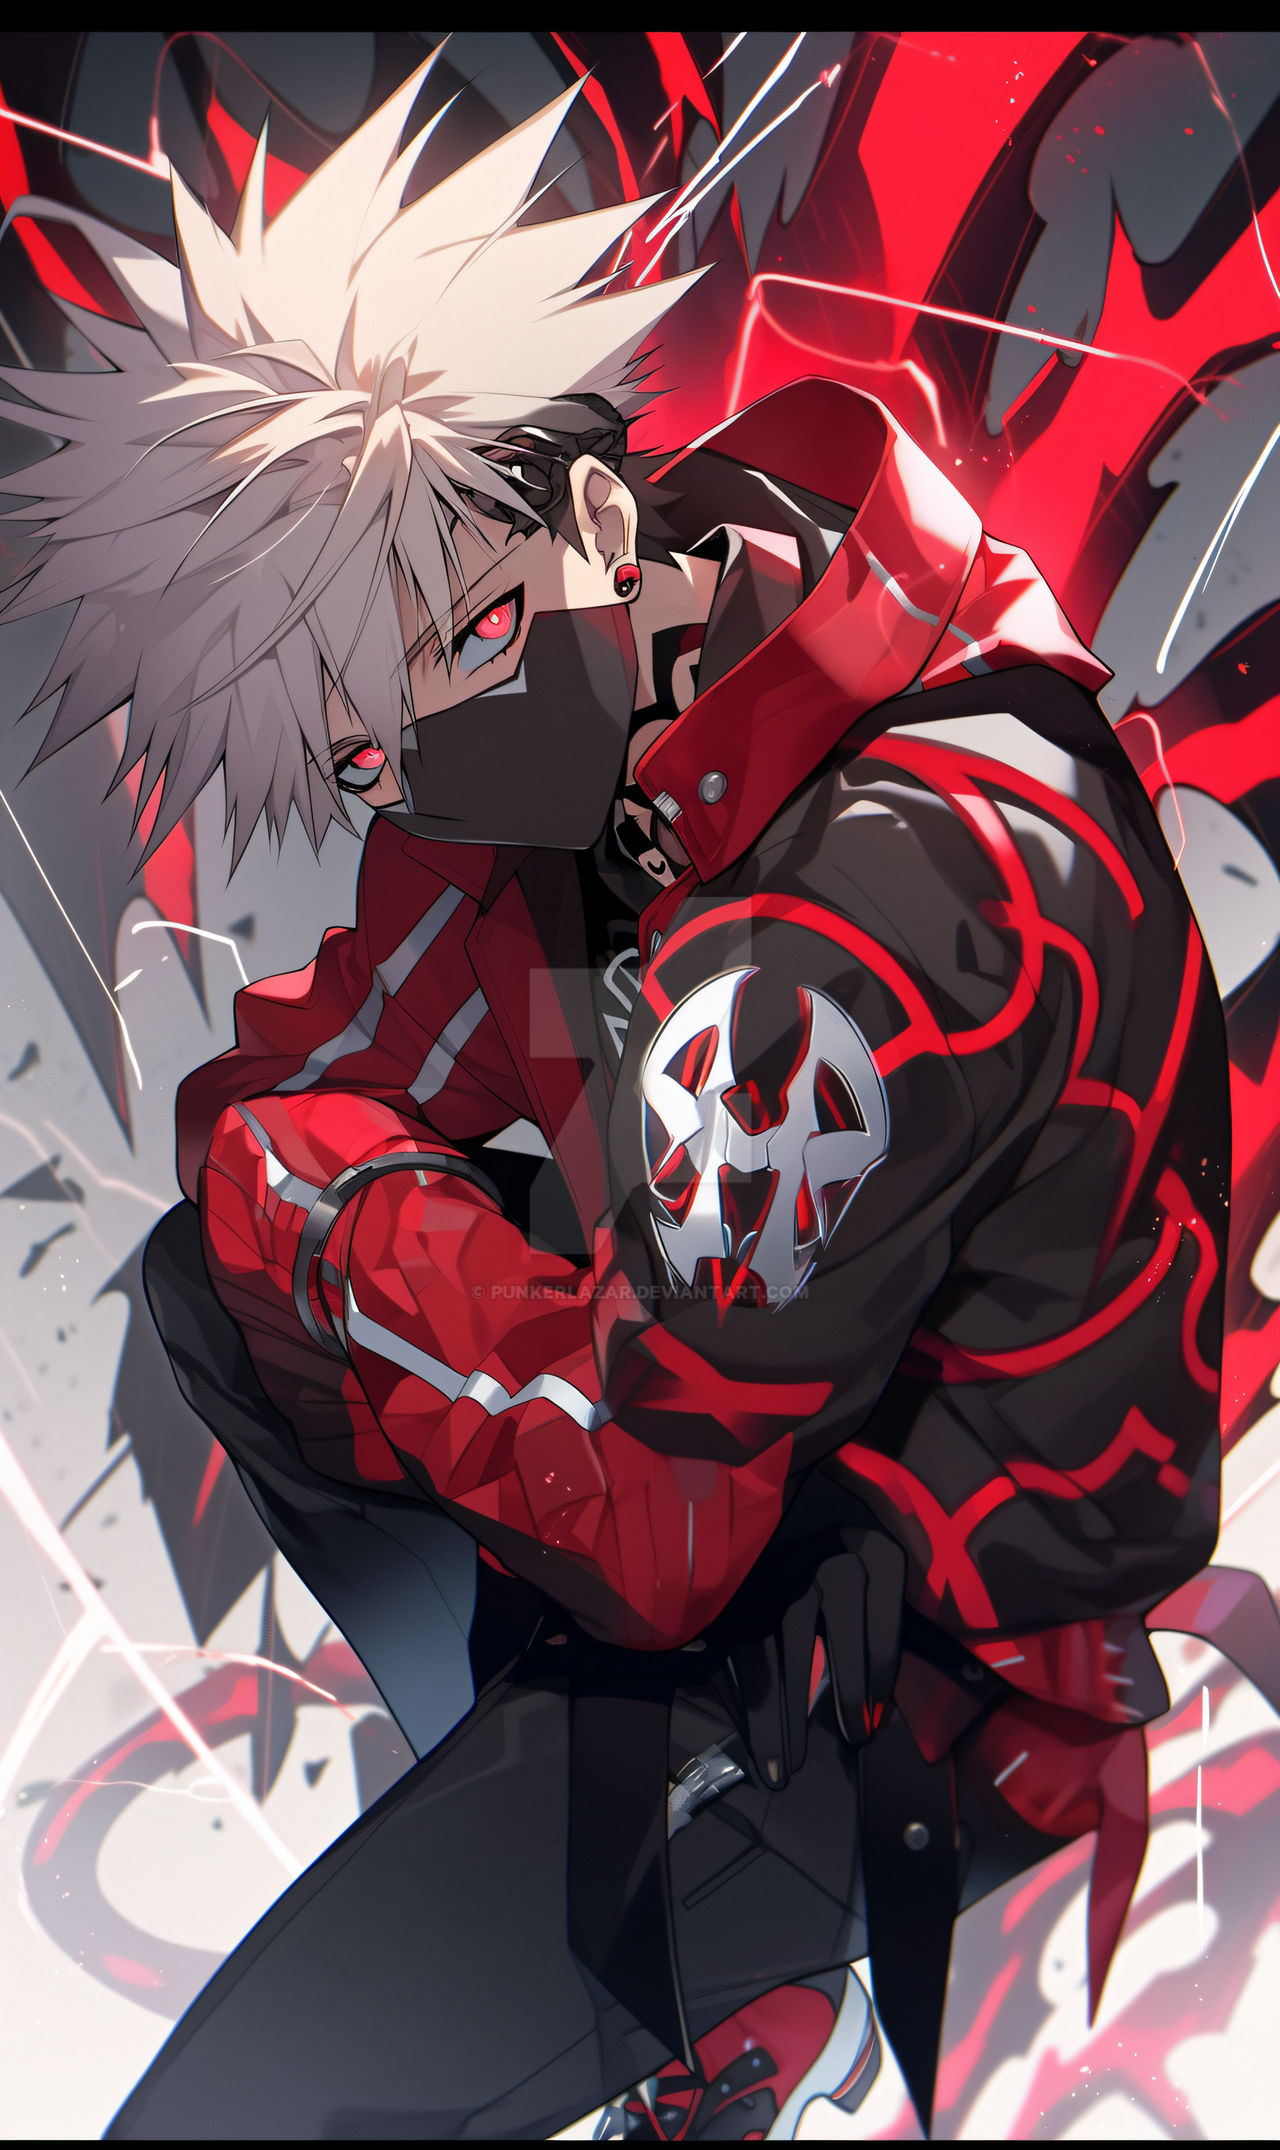 Anime Demon Boy (4) by PunkerLazar on DeviantArt